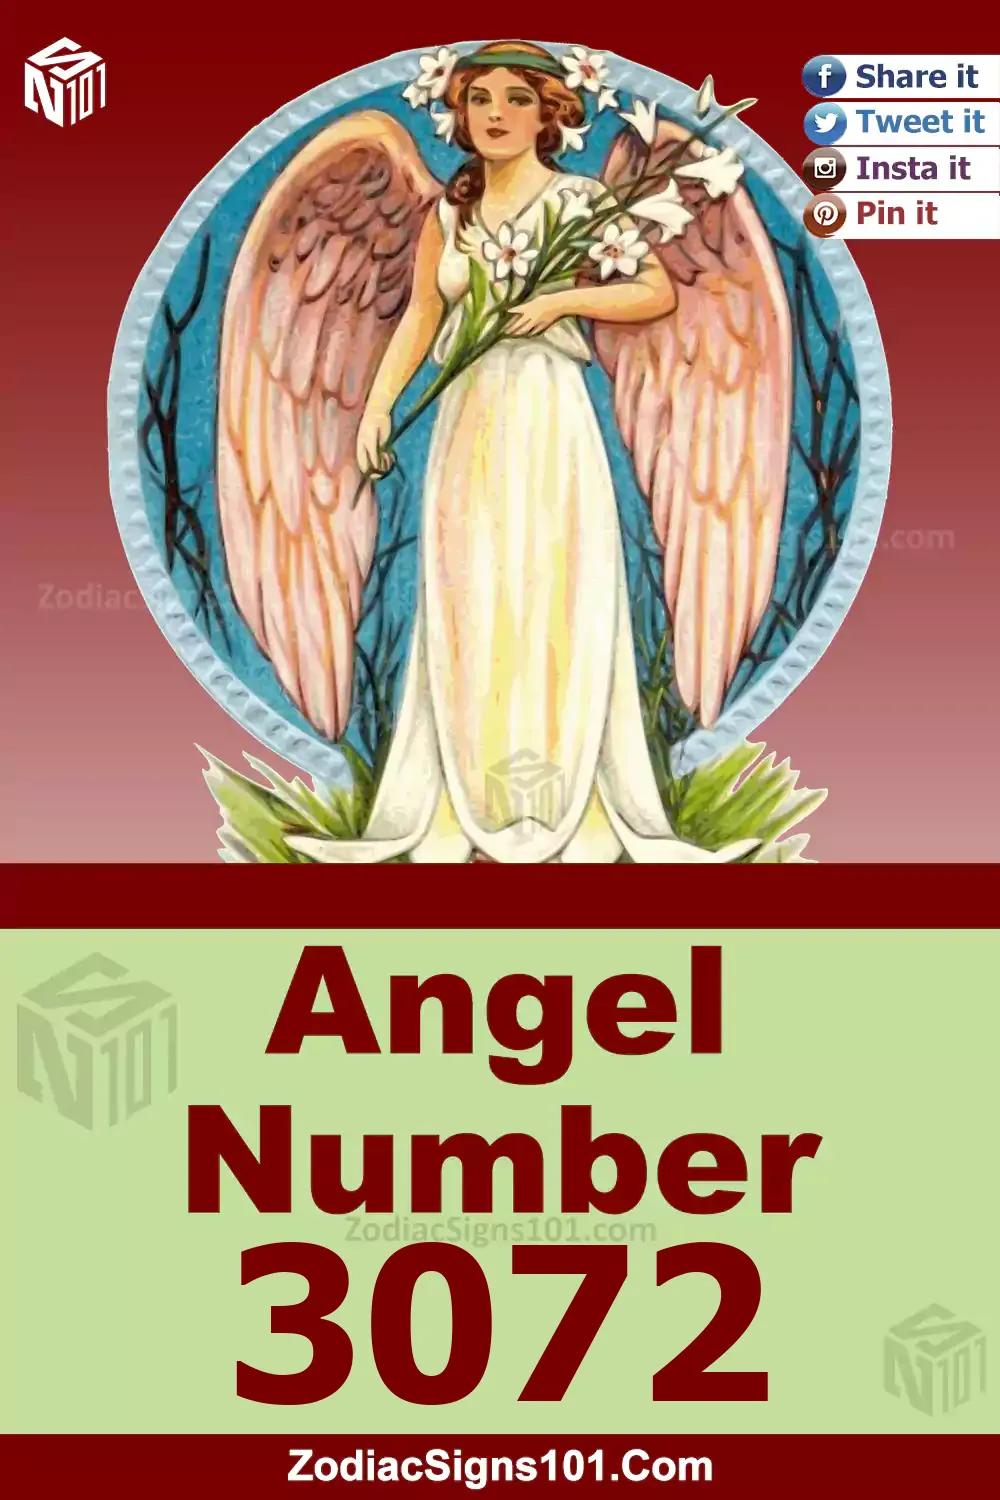 3072-Angel-Number-Meaning.jpg